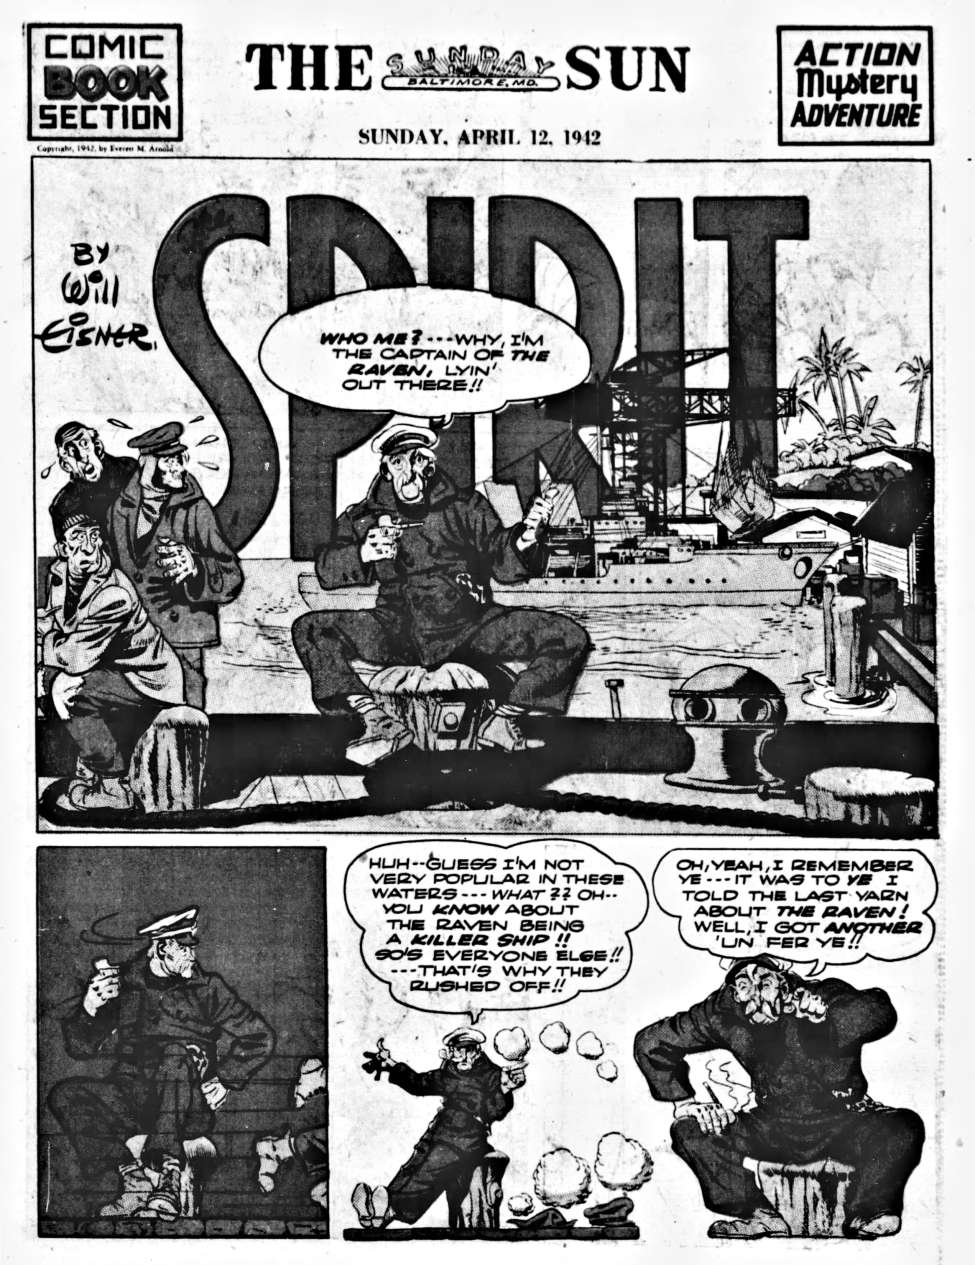 Comic Book Cover For The Spirit (1942-04-12) - Baltimore Sun (b/w)